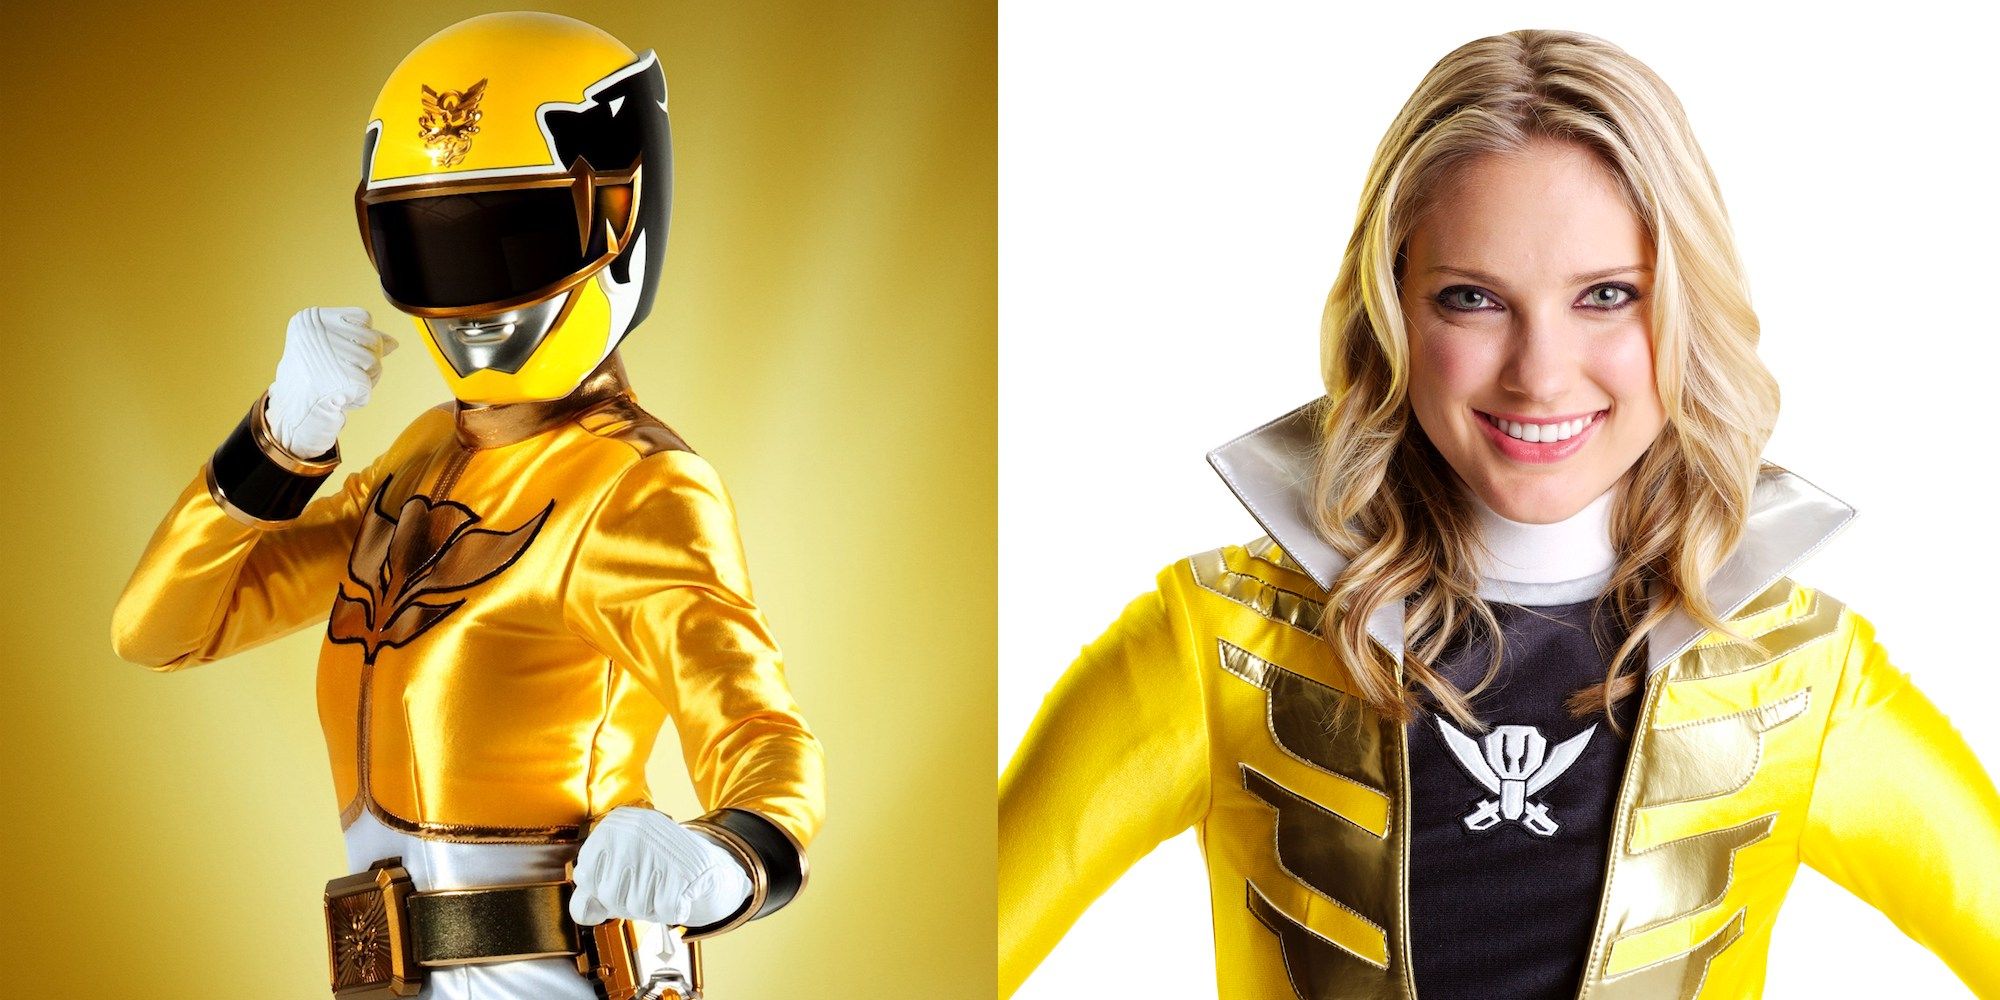 Ciara Hanna as the Yellow Megaforce Ranger